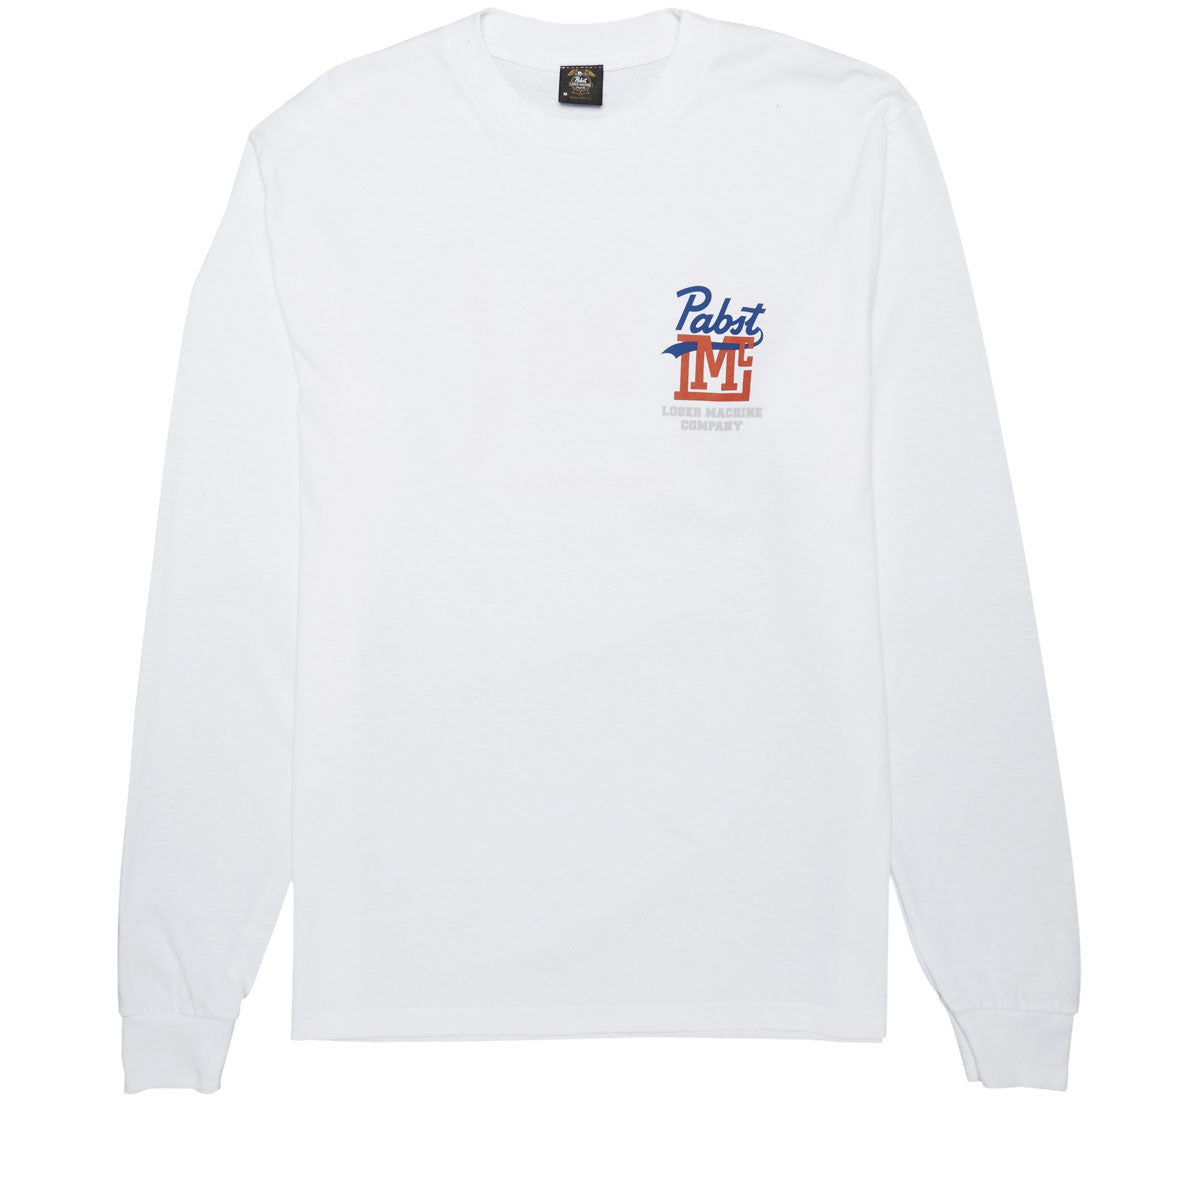 Loser Machine Ballpark T-Shirt - White image 2